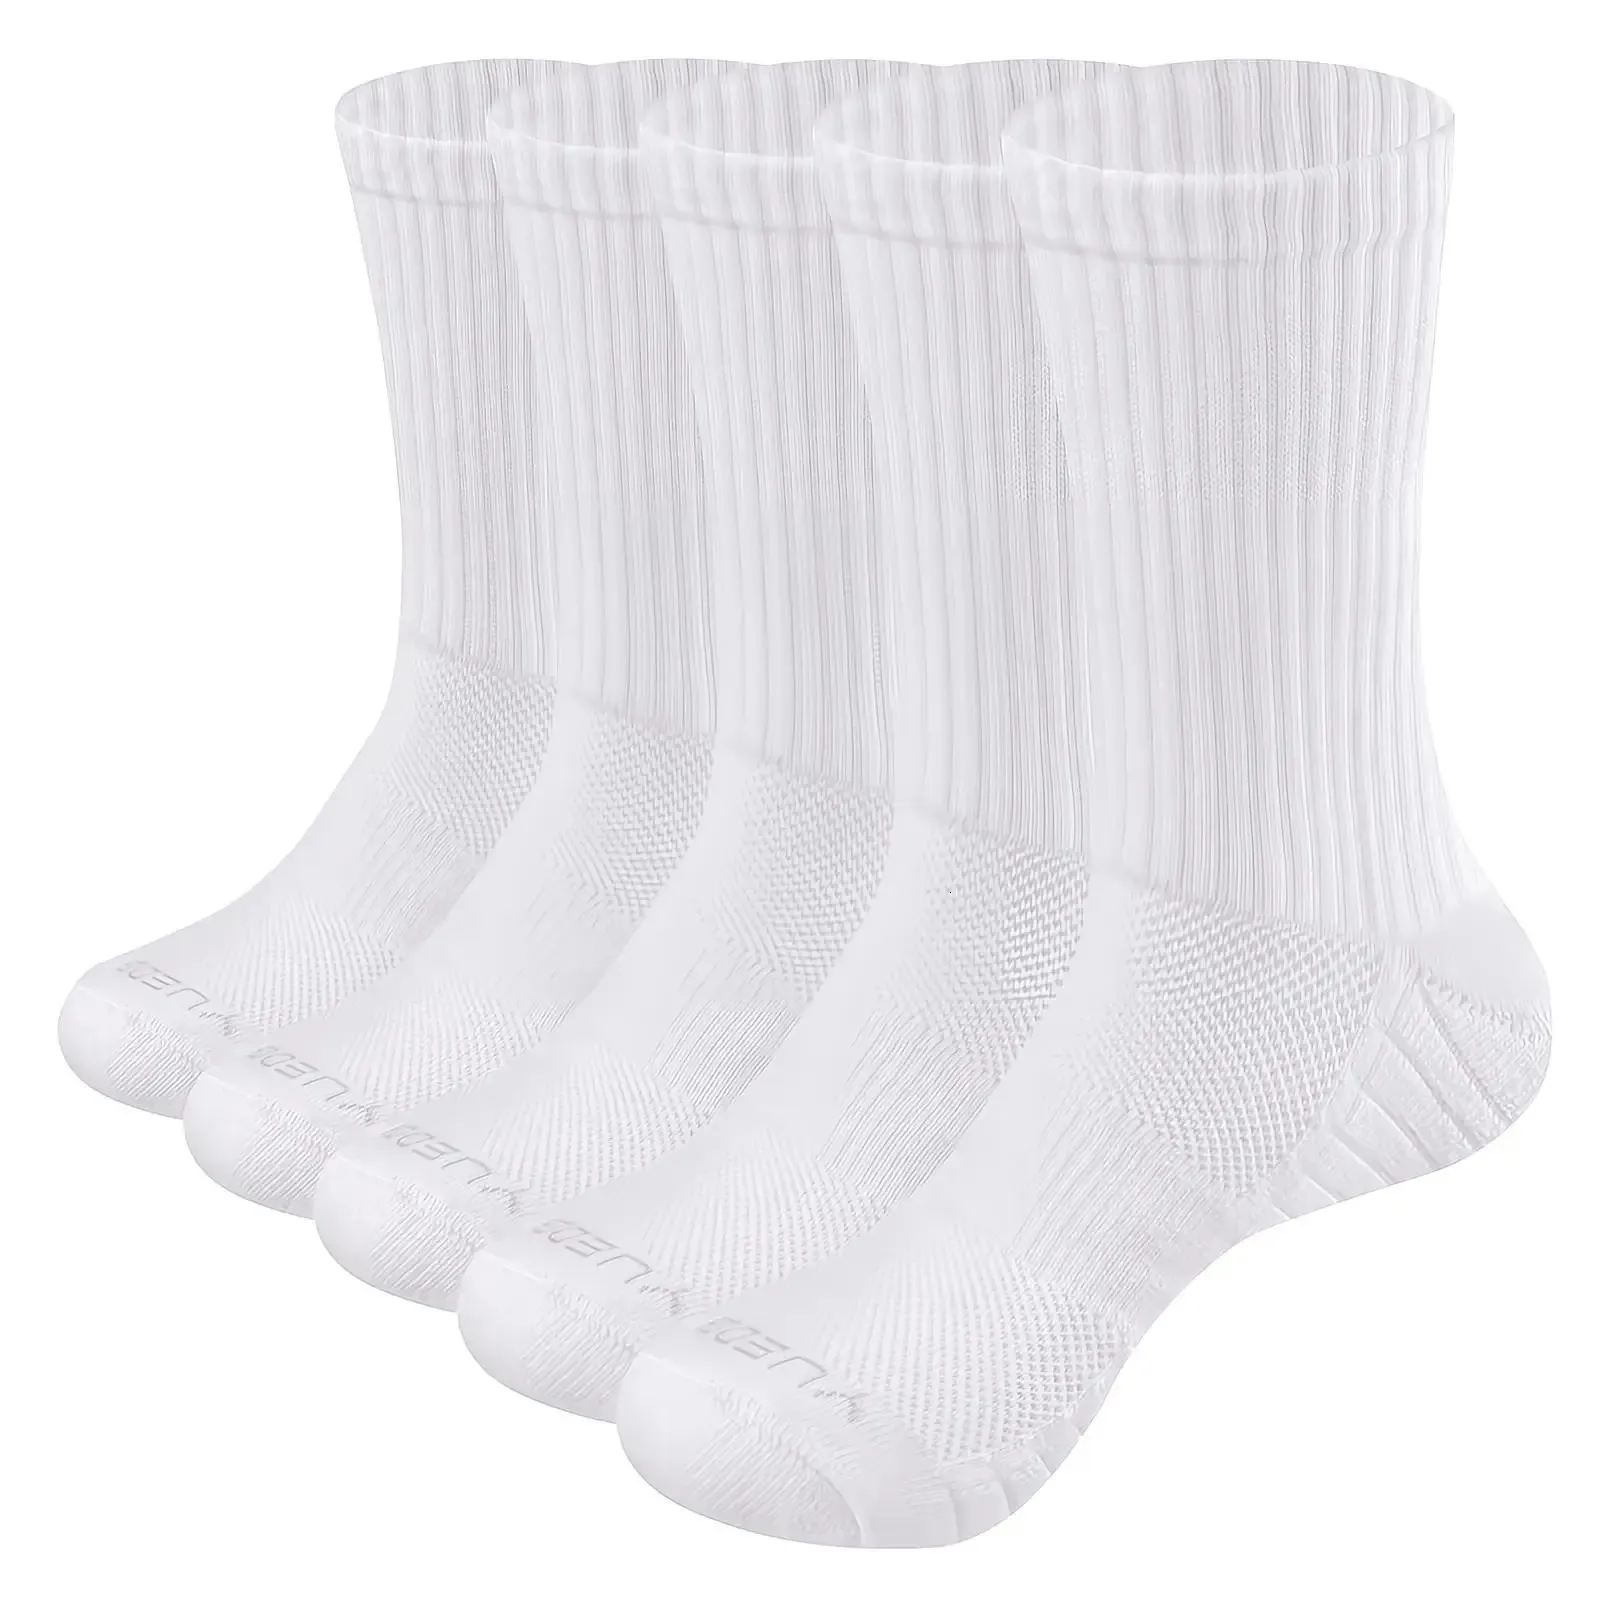 Sports Socks YUEDGE Women Socks White Black Warm Cotton Cushion Cycling Running Training Hiking Athletic Sports Crew Socks Size 36-43 EU 231101